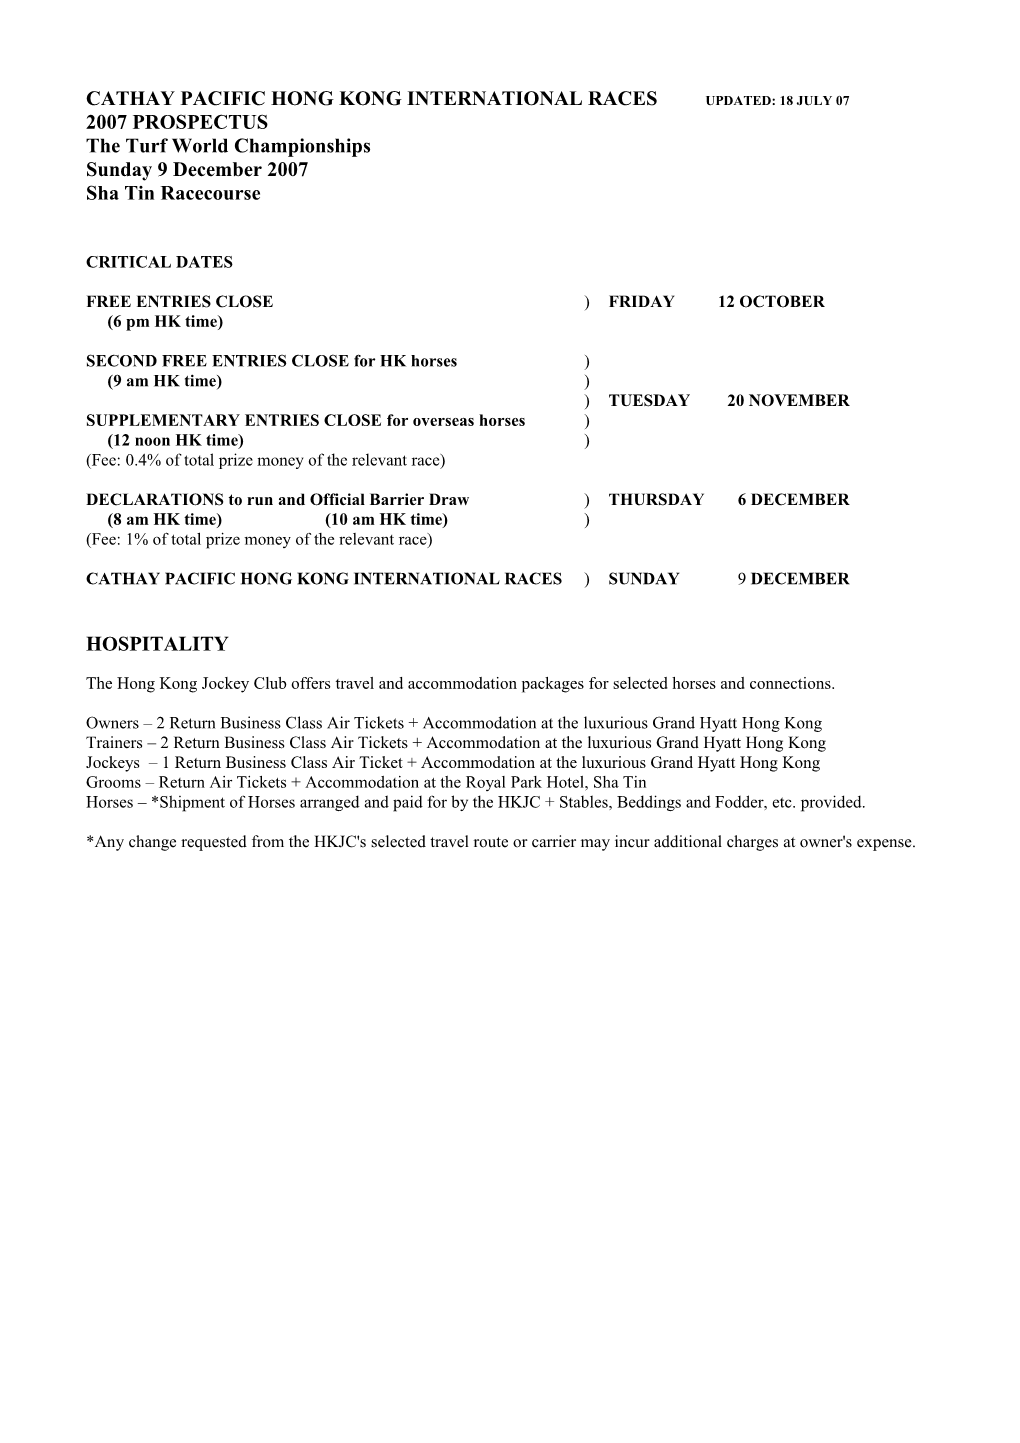 Cathay Pacific Hong Kong International Racesupdated: 18 July 07